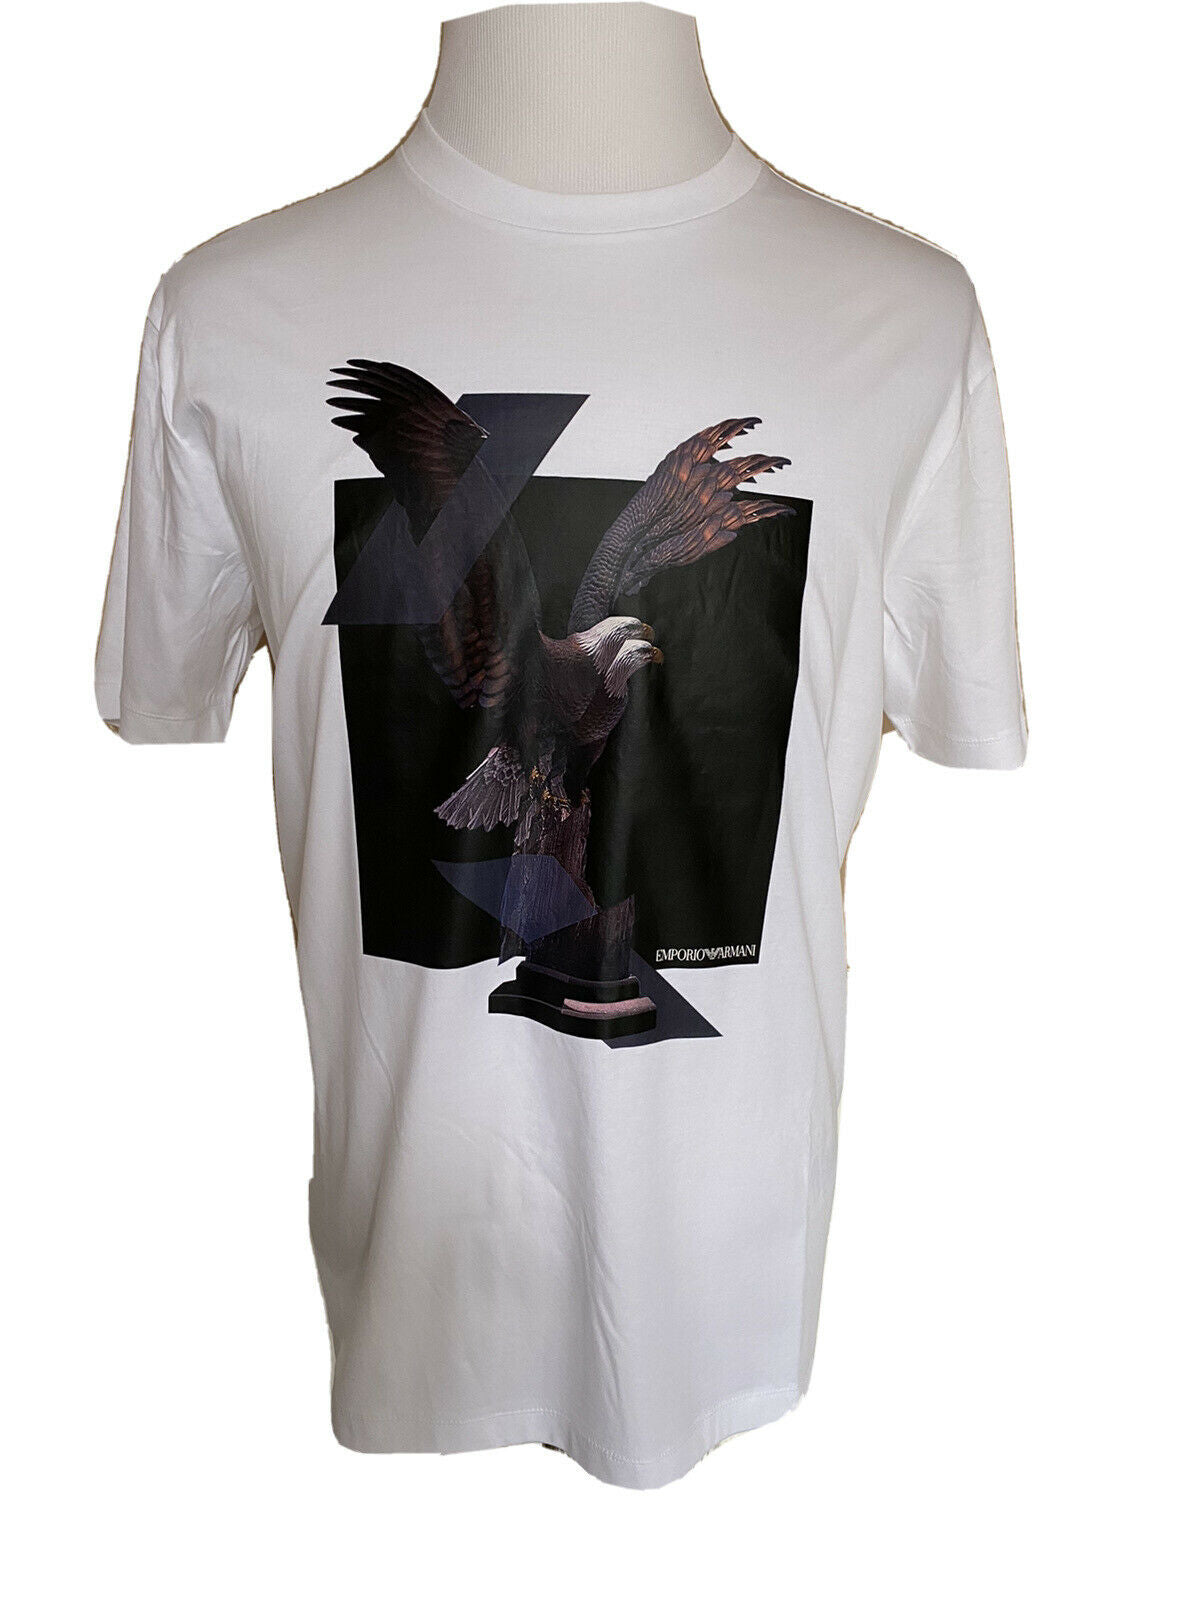 NWT $225 Emporio Armani White Short Sleeve Eagle Graphic T-Shirt 3XL 3G1T70